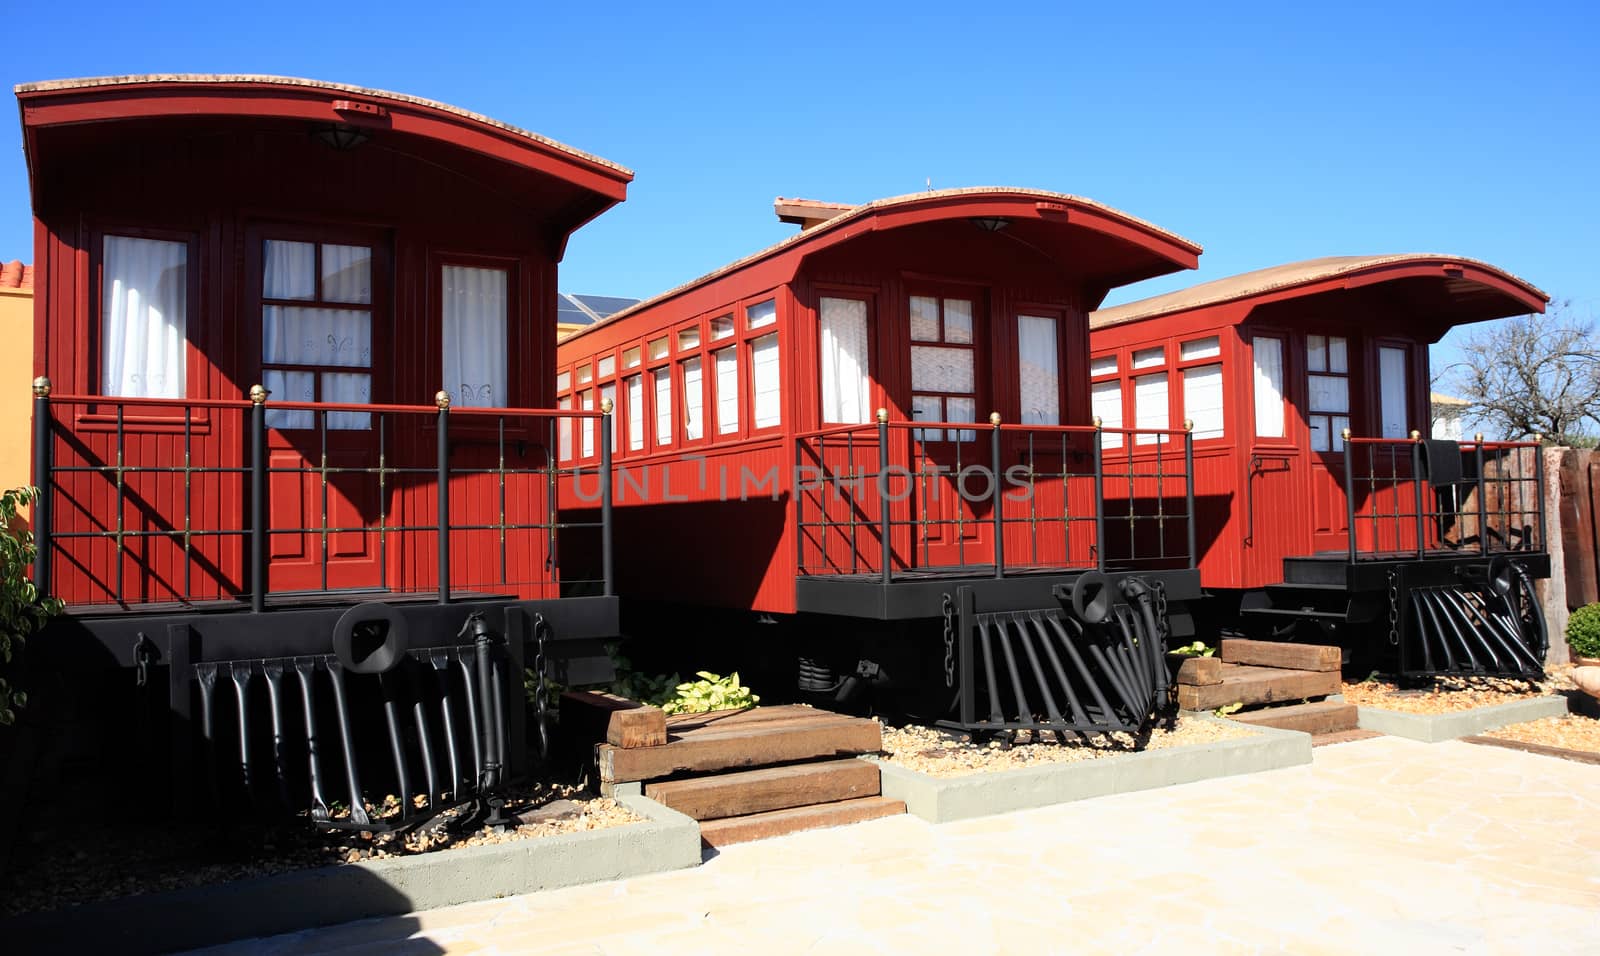 farwest red wagon hotelroom in brazil